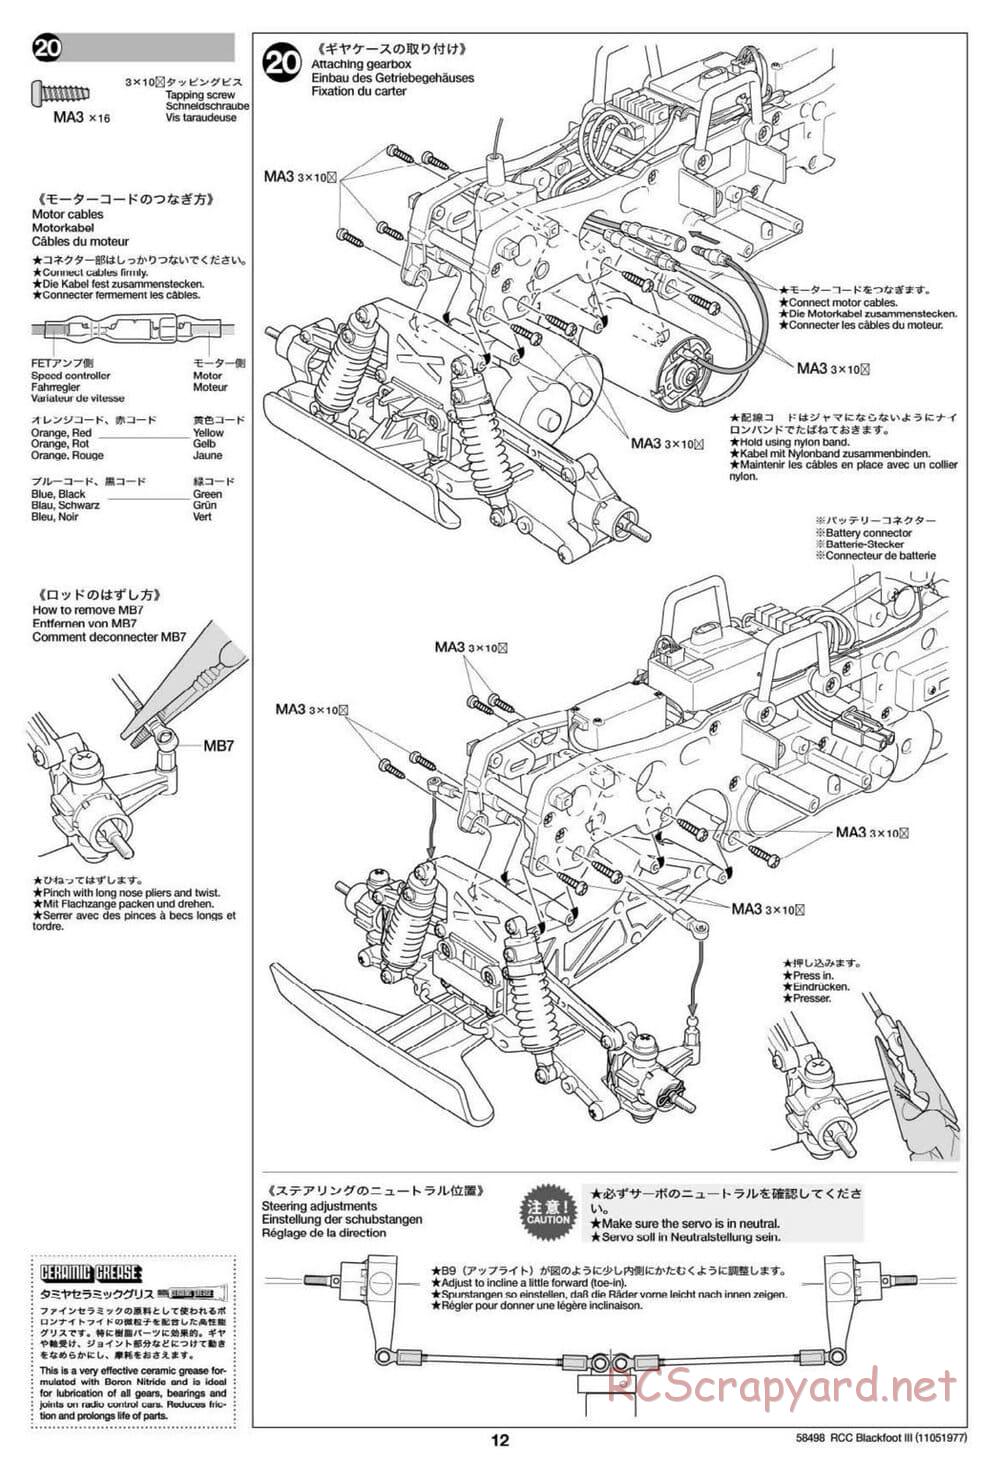 Tamiya - Blackfoot III - WT-01 Chassis - Manual - Page 12